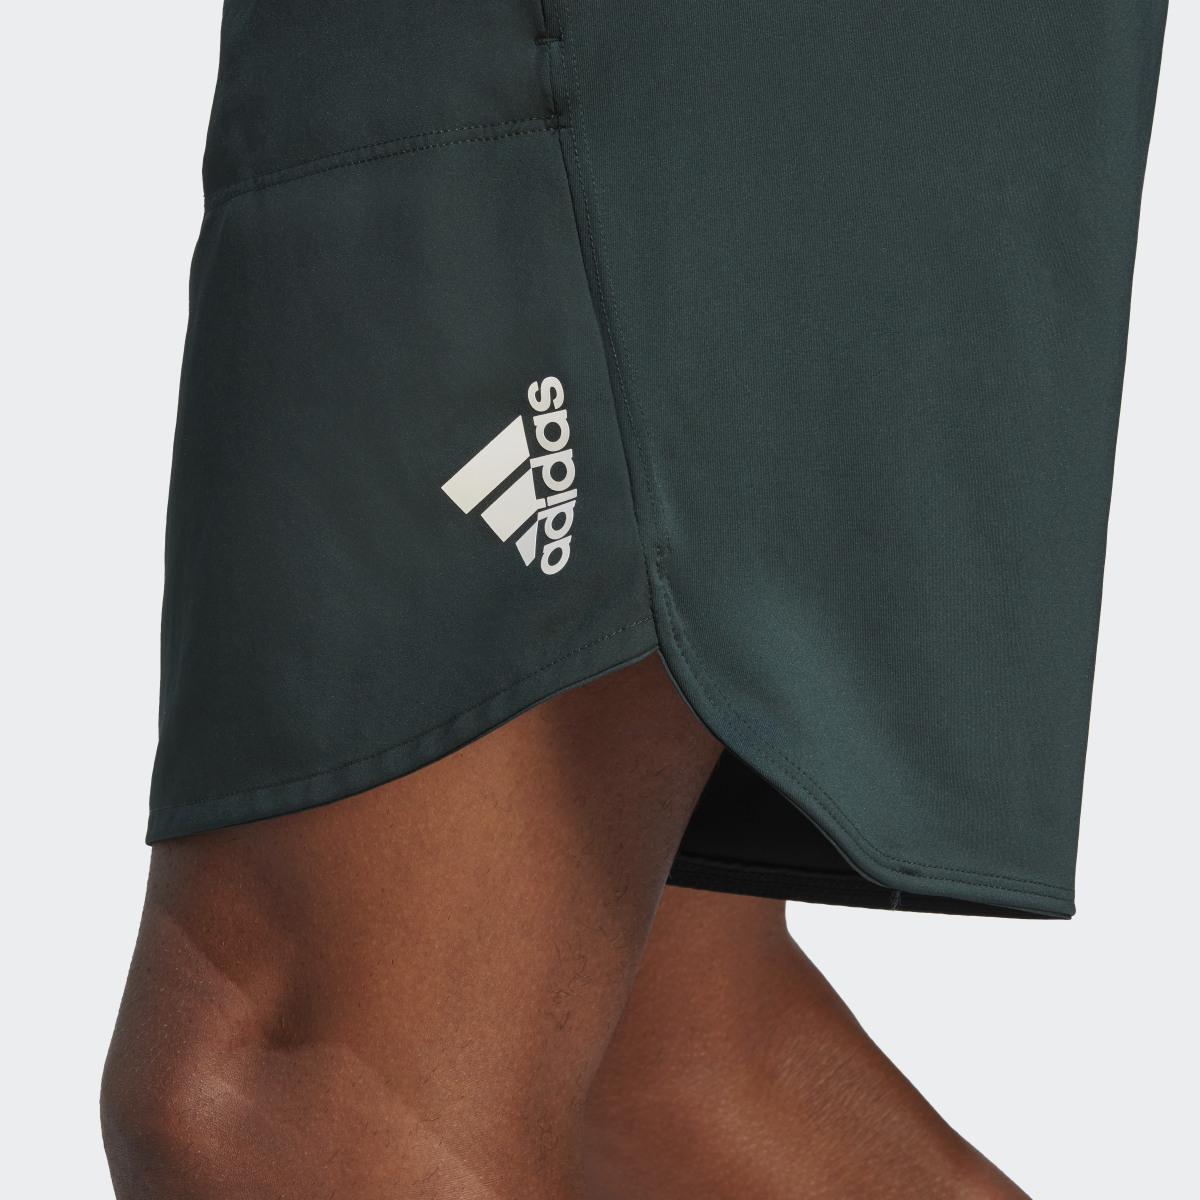 Adidas Short Designed for Training. 5